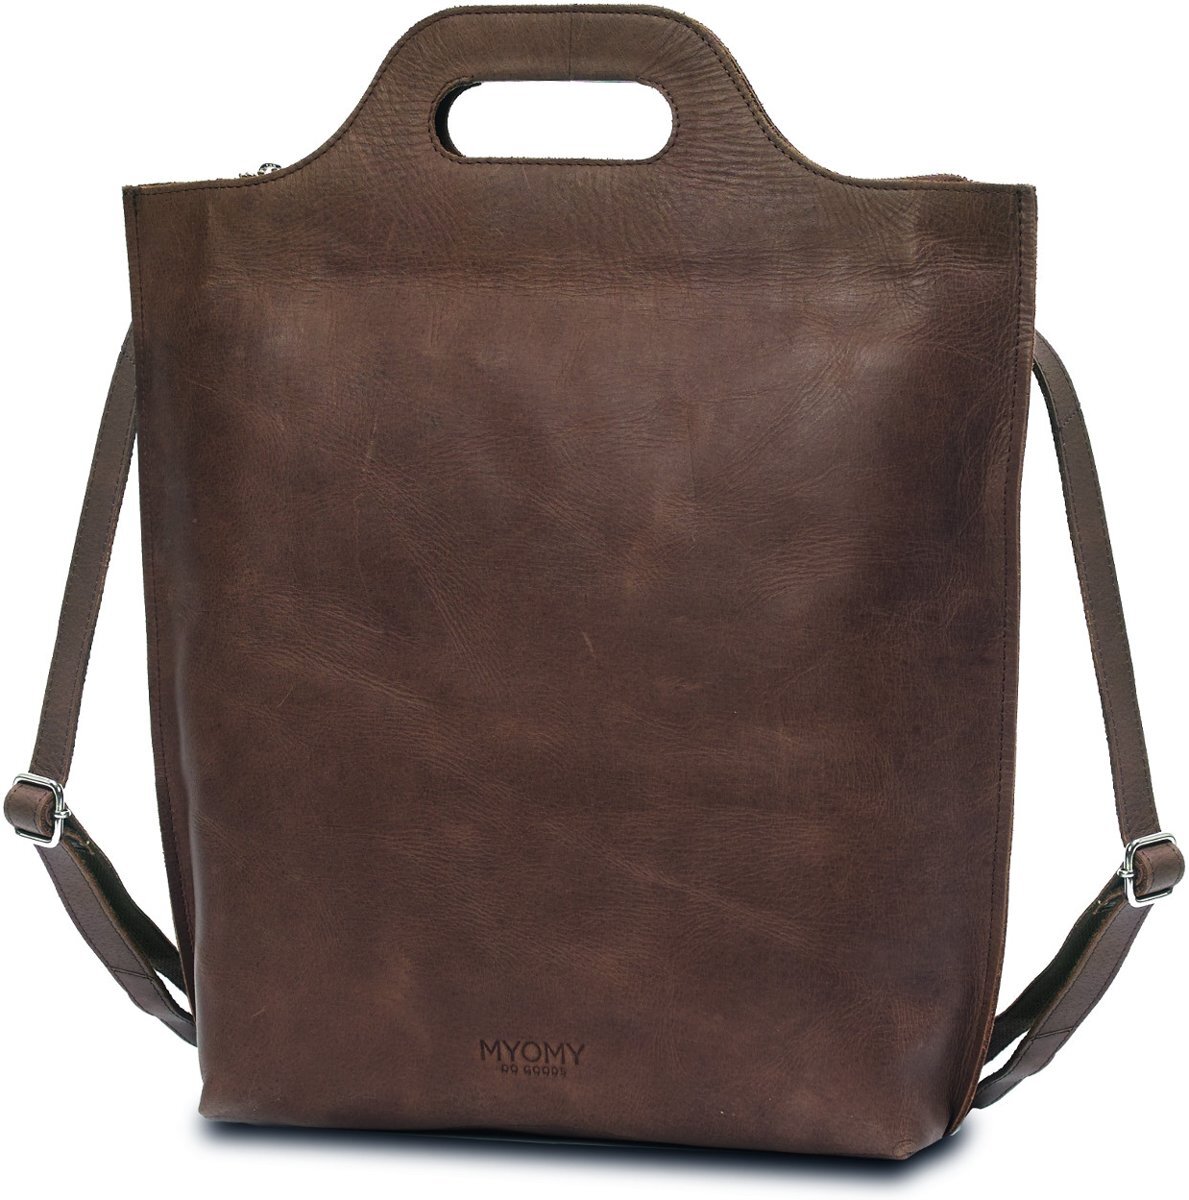 MYOMY My Carry Bag Back Bag Medium Hunter Original Rugzak MOM80890001 Inhoud: 6L